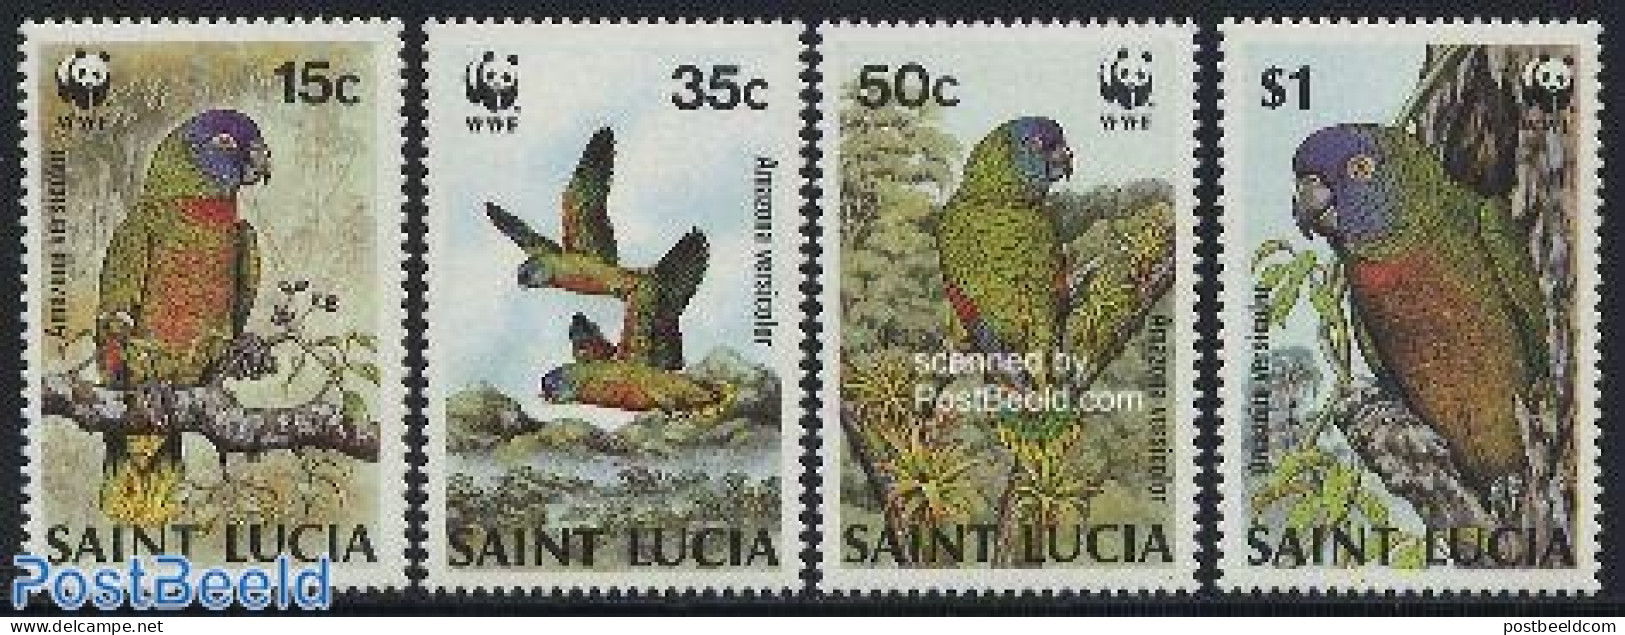 Saint Lucia 1987 WWF 4v, Mint NH, Nature - Birds - Parrots - World Wildlife Fund (WWF) - St.Lucie (1979-...)